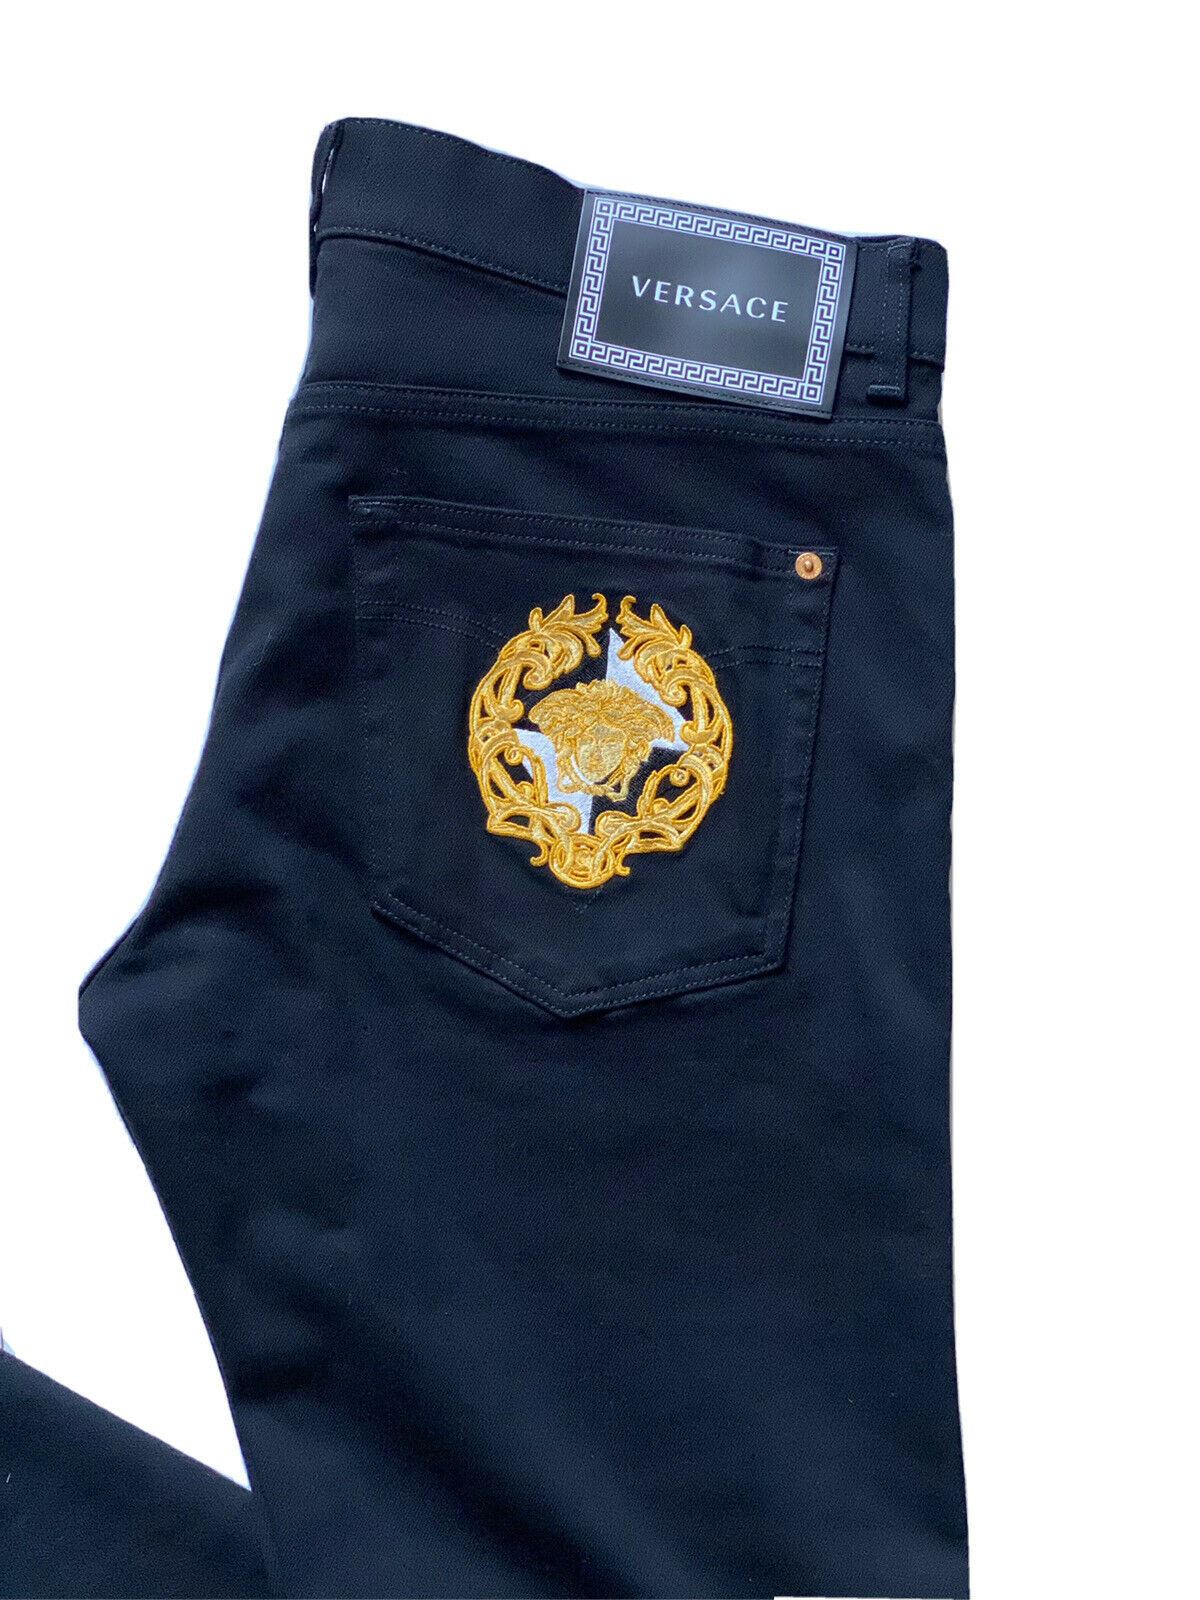 NWT Versace Men's Denim Medusa Logo Black Jeans Size 36 US (52 Eu) 81832 Italy